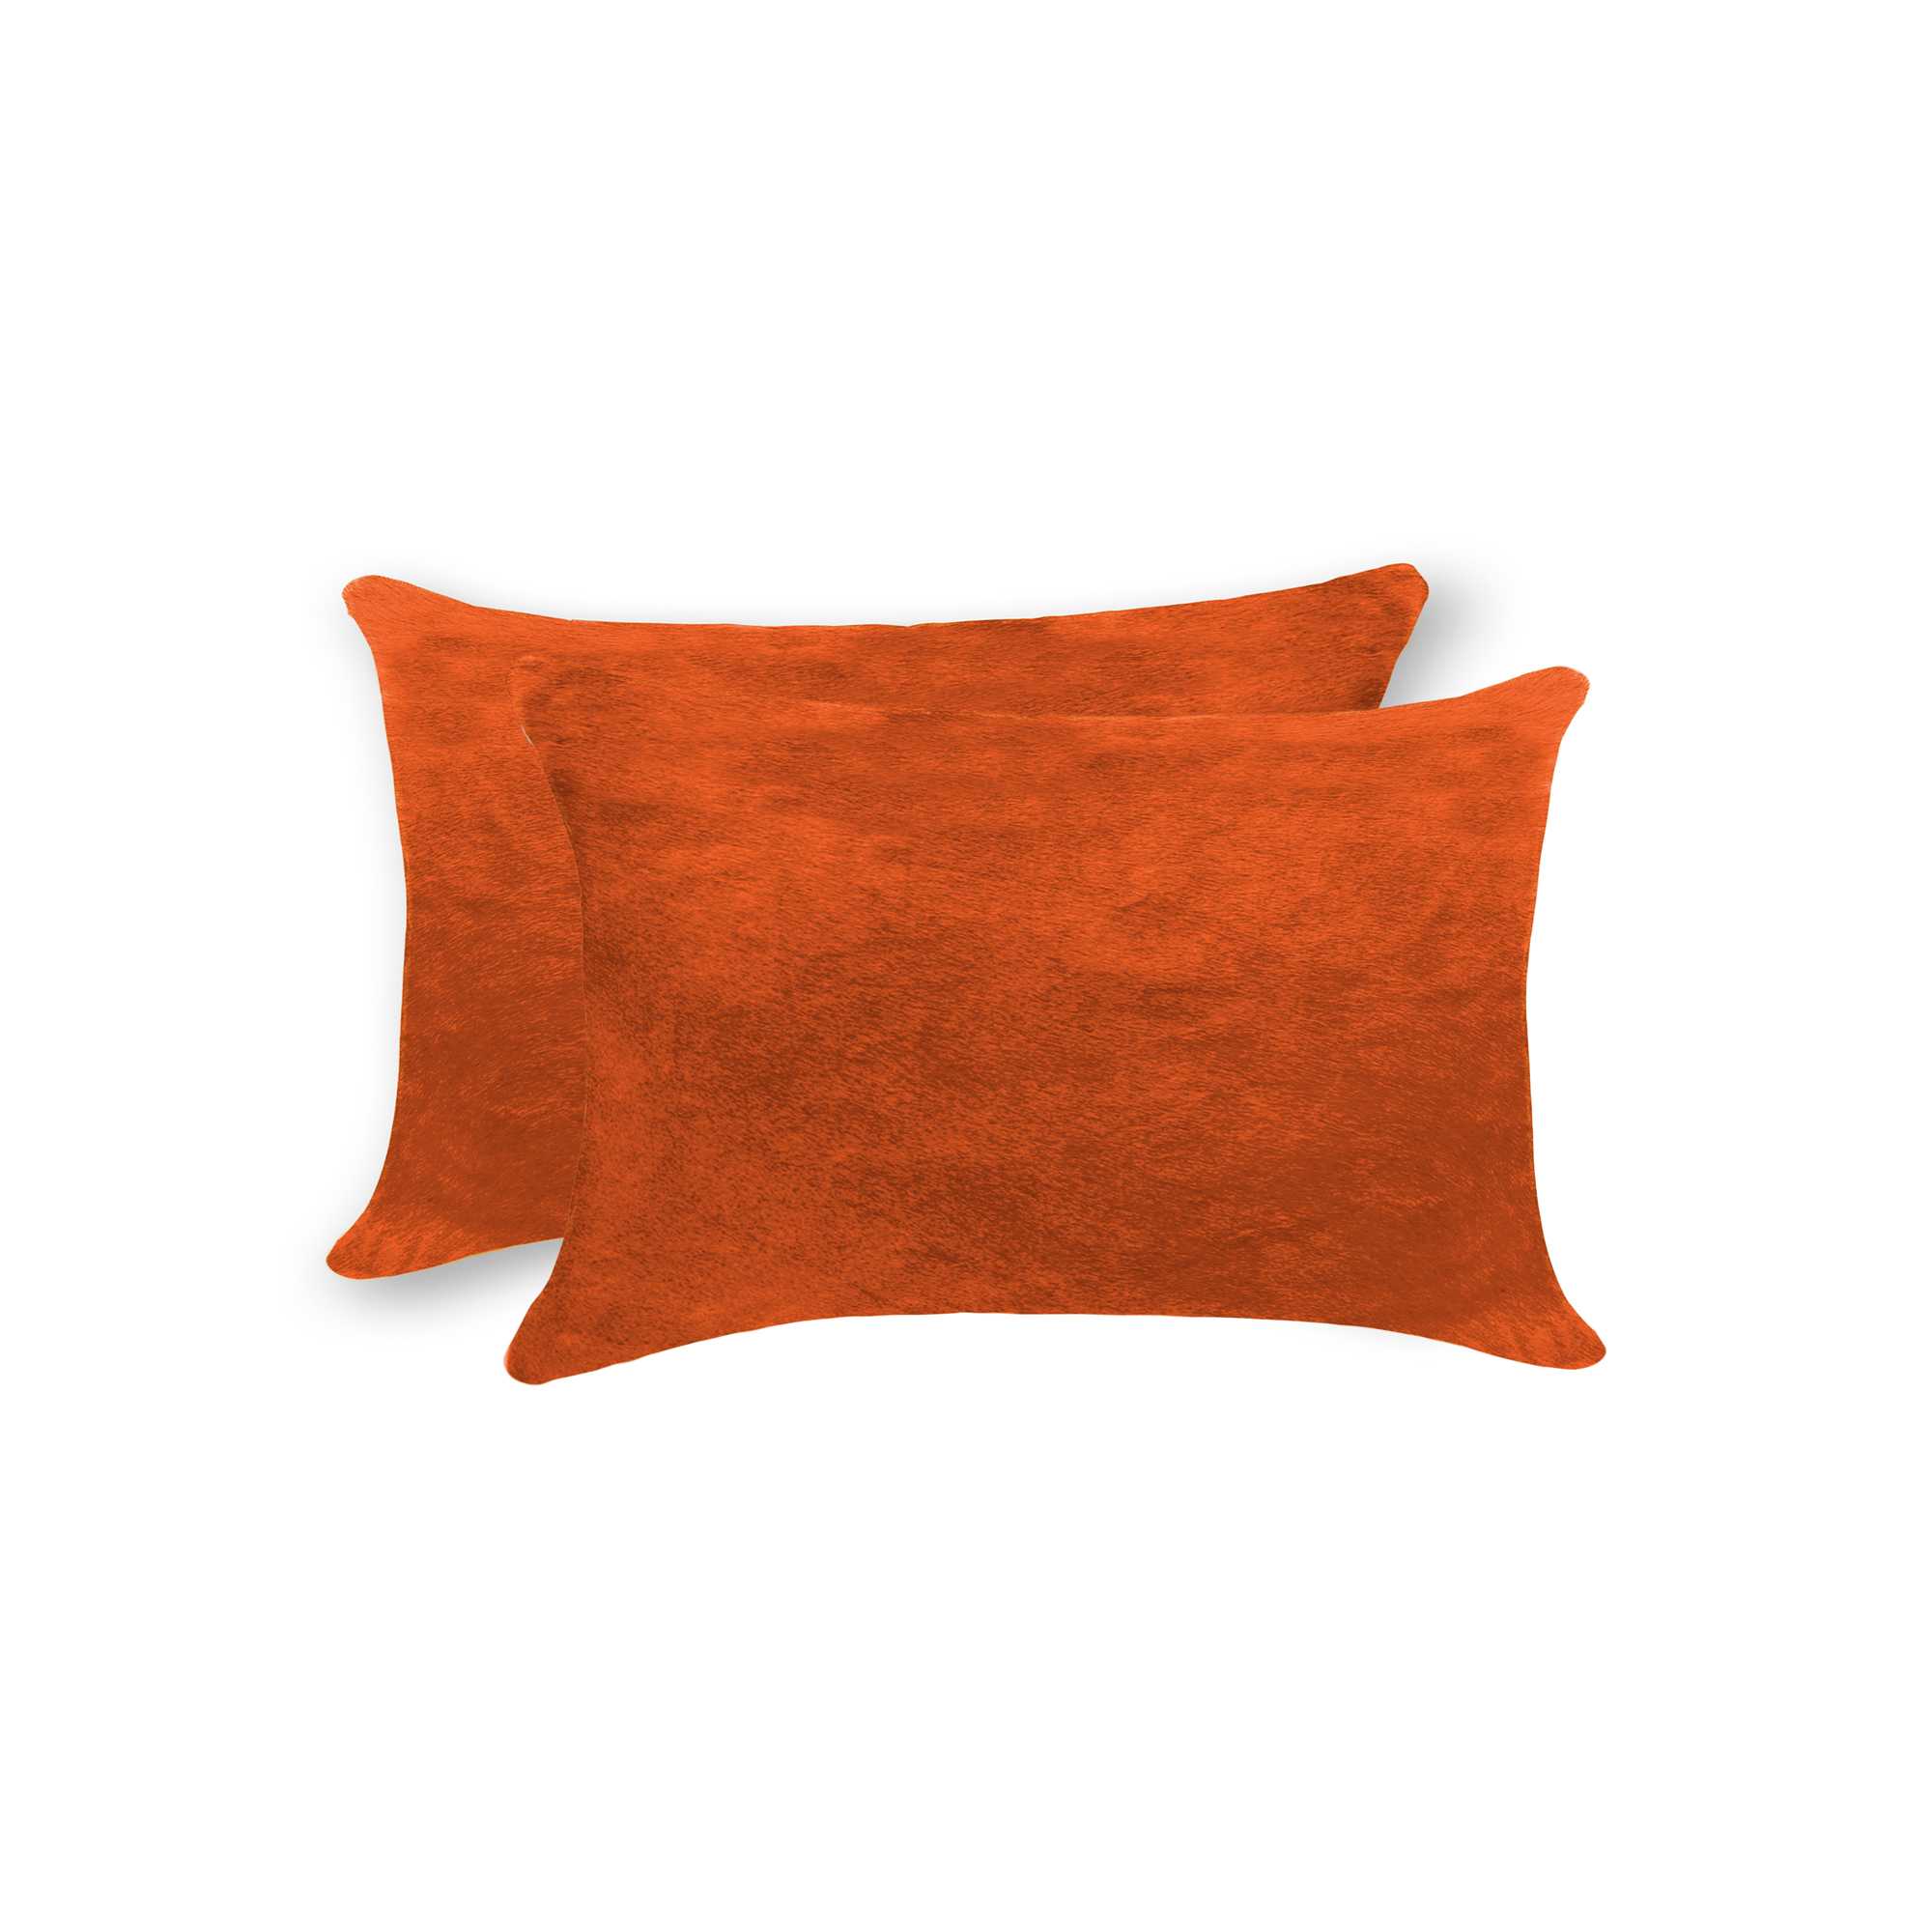 12" x 20" x 5" Orange, Cowhide - Pillow 2-Pack